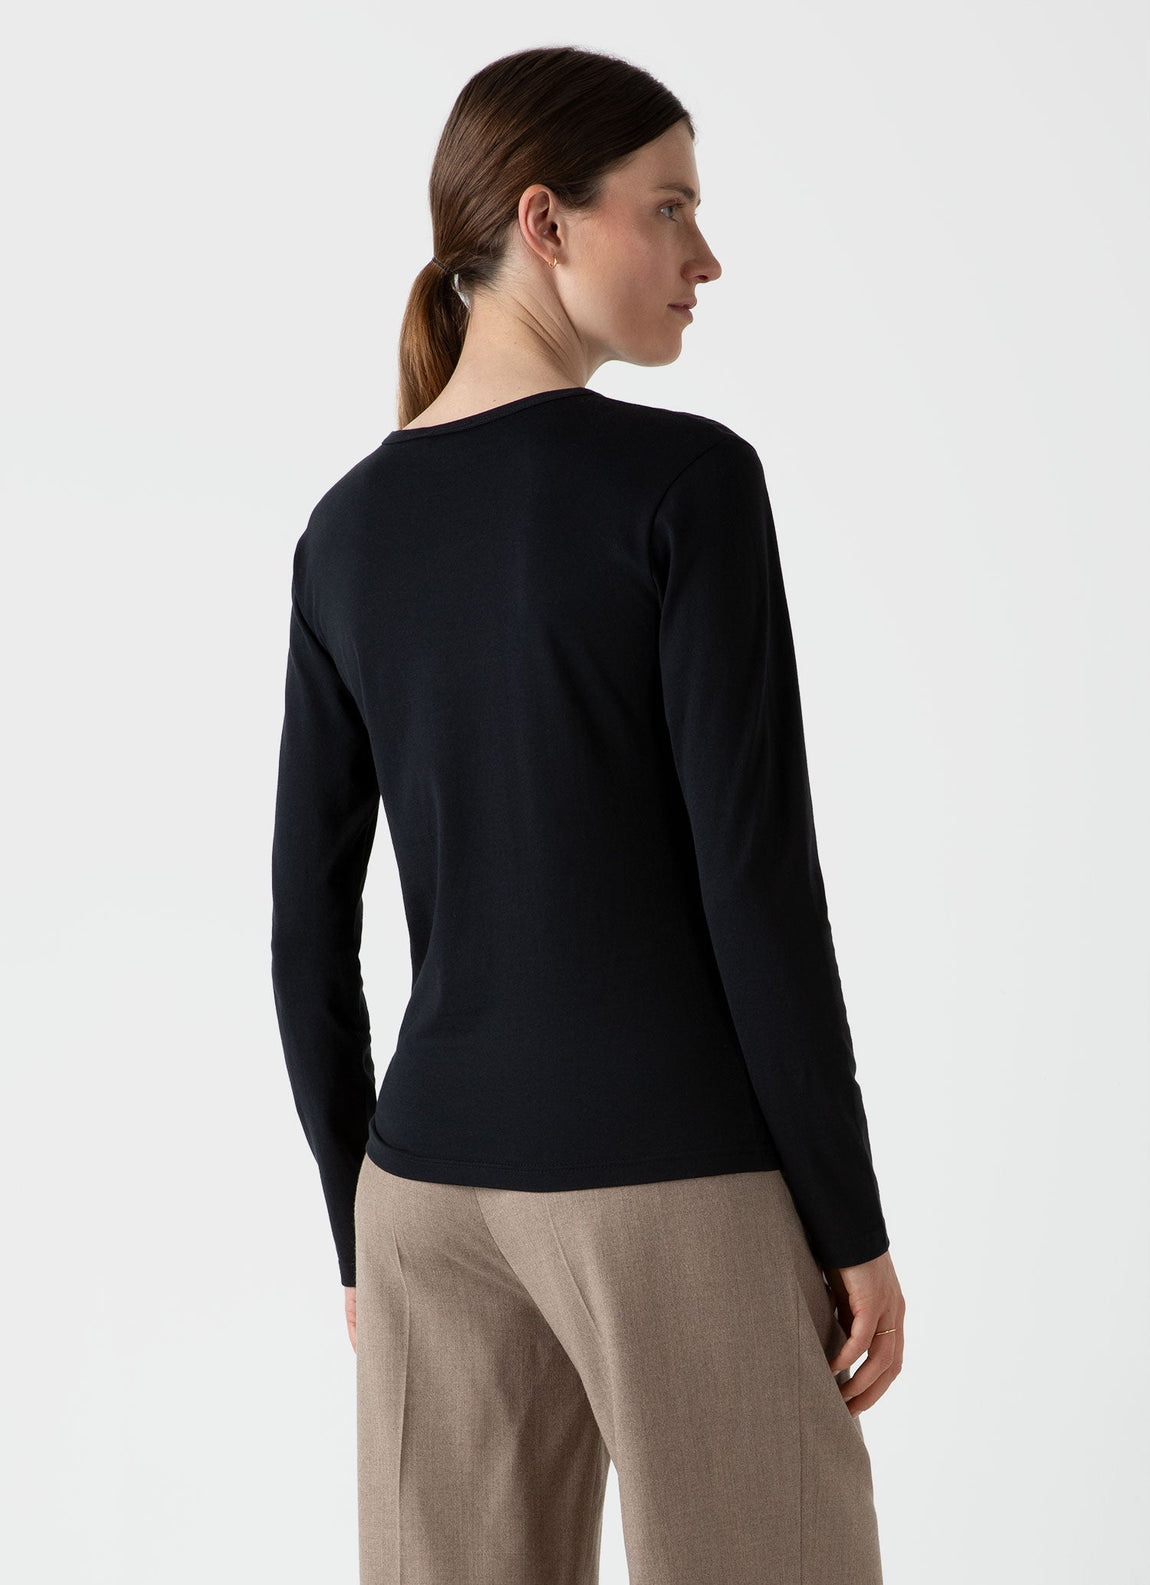 Women's Long Sleeve Classic T-shirt in Black